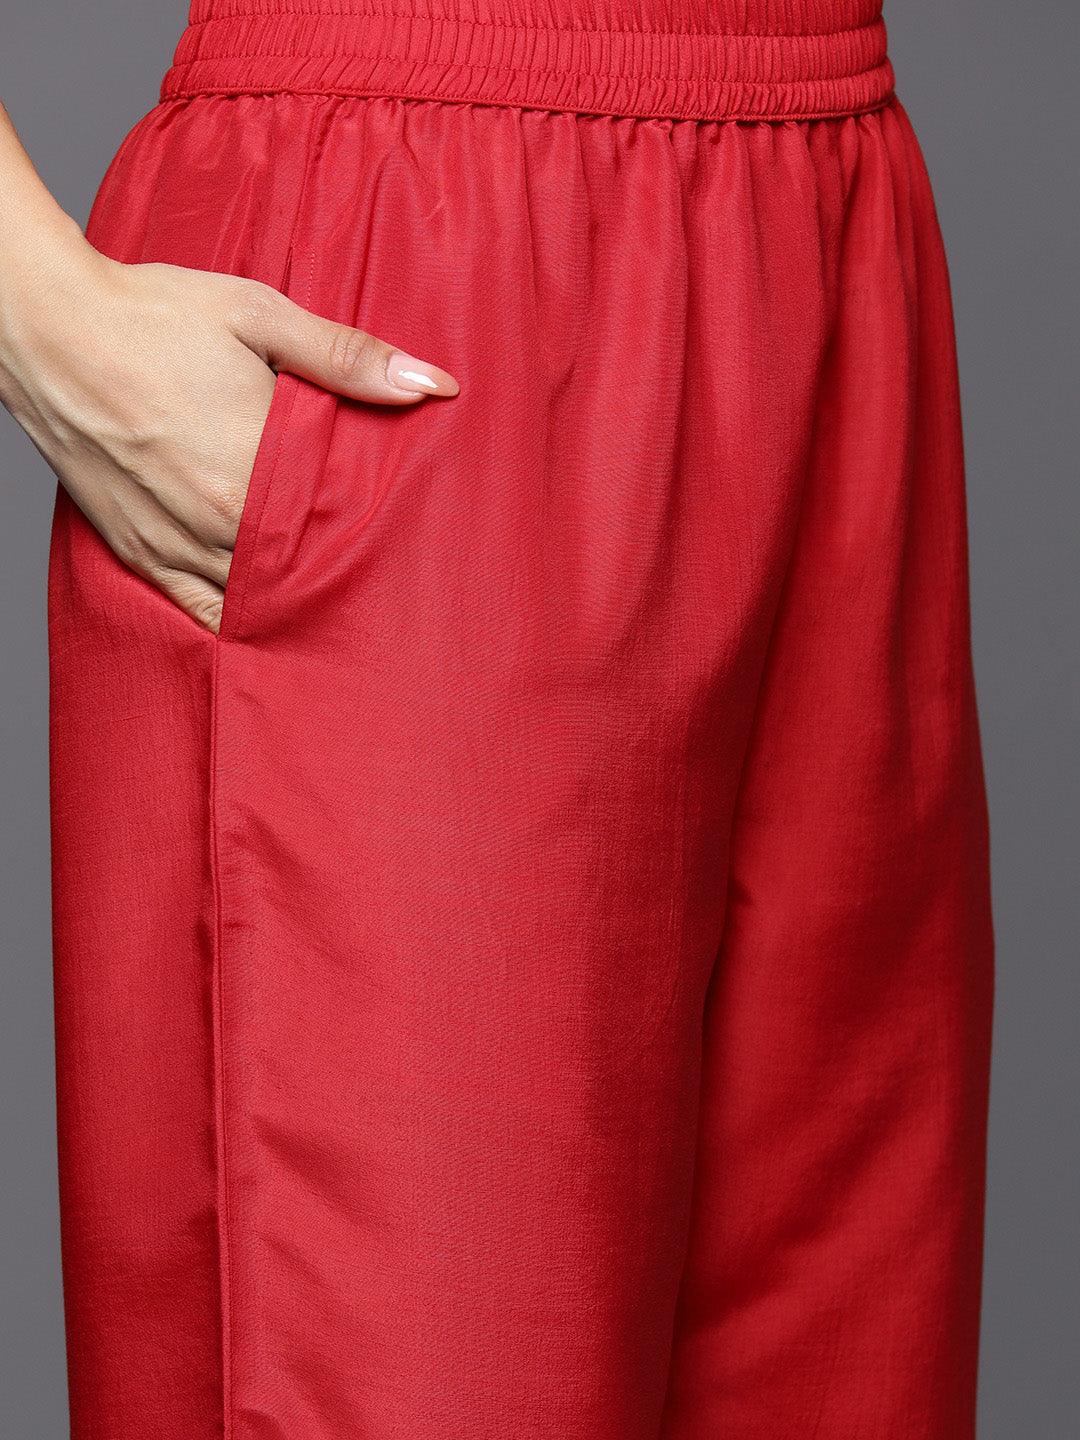 Red Printed Chiffon Straight Kurta With Trousers & Dupatta